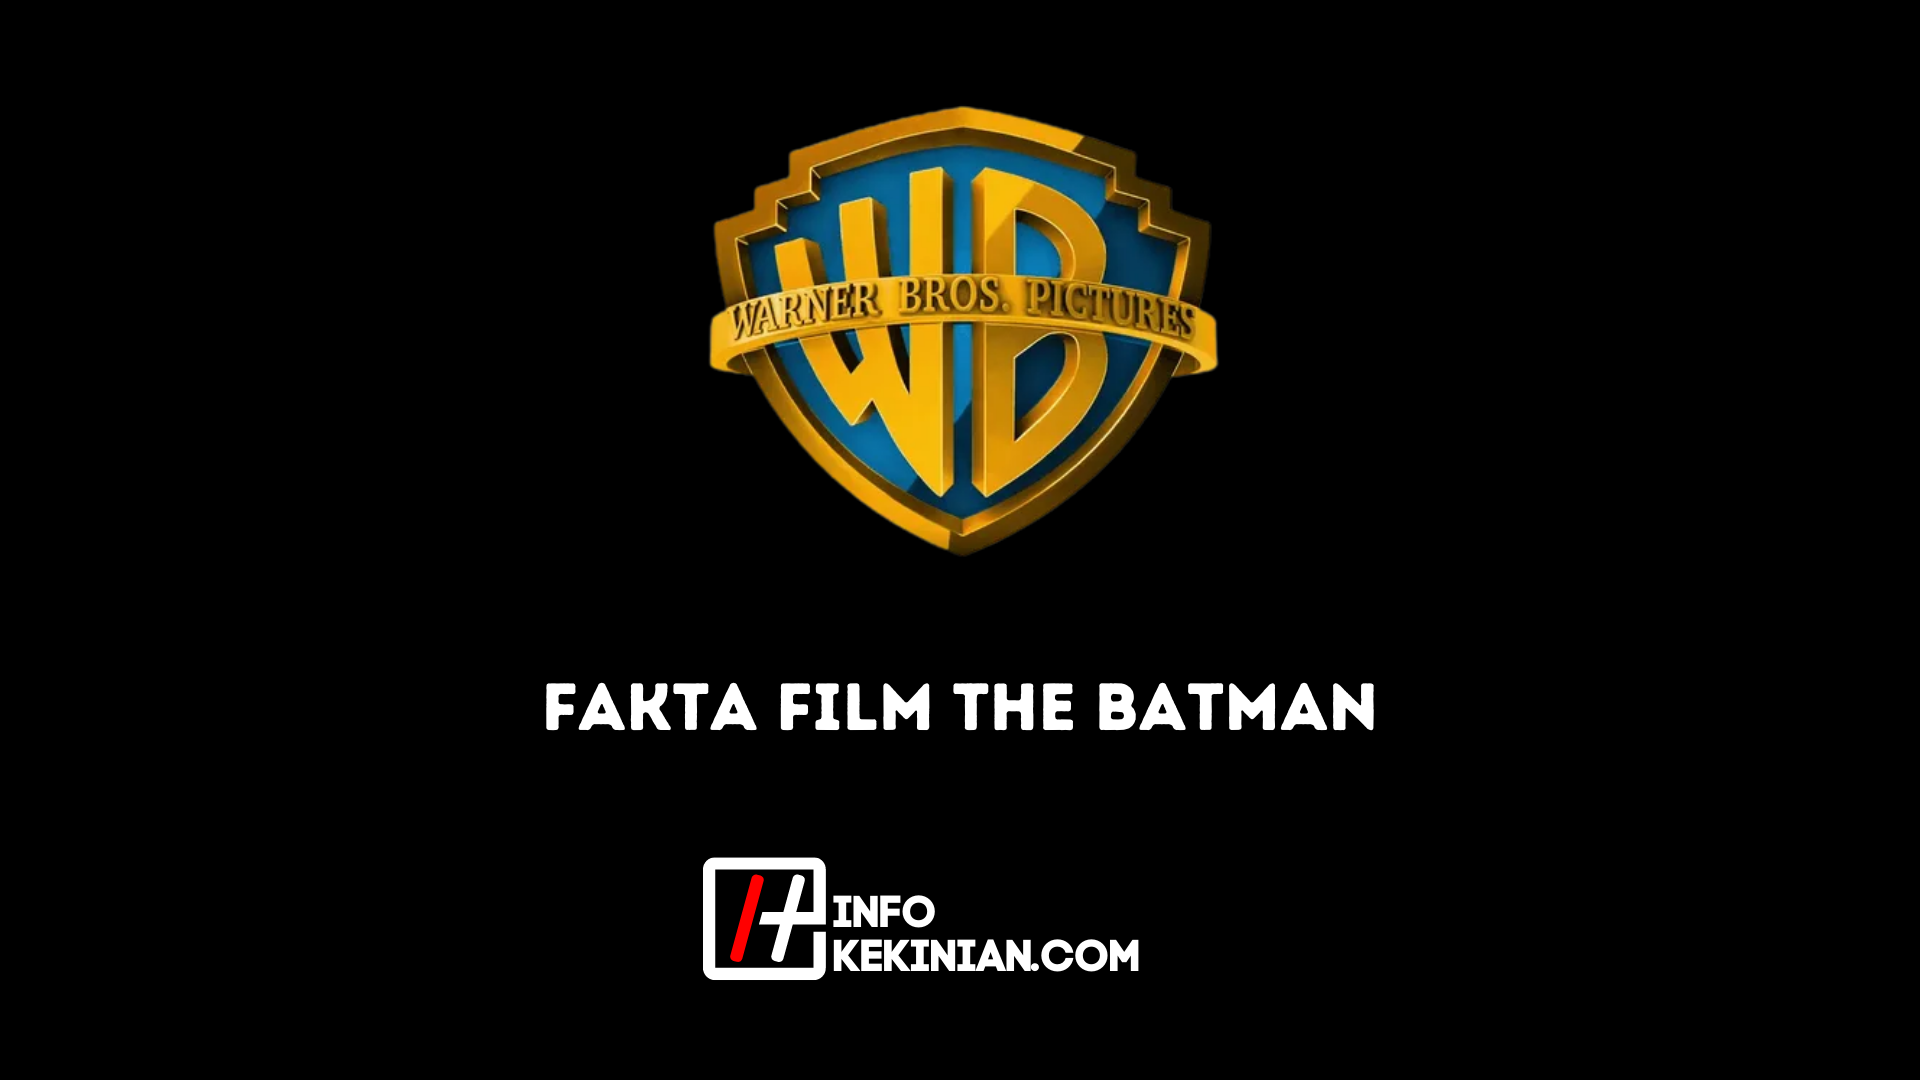 The Batman Movie Facts